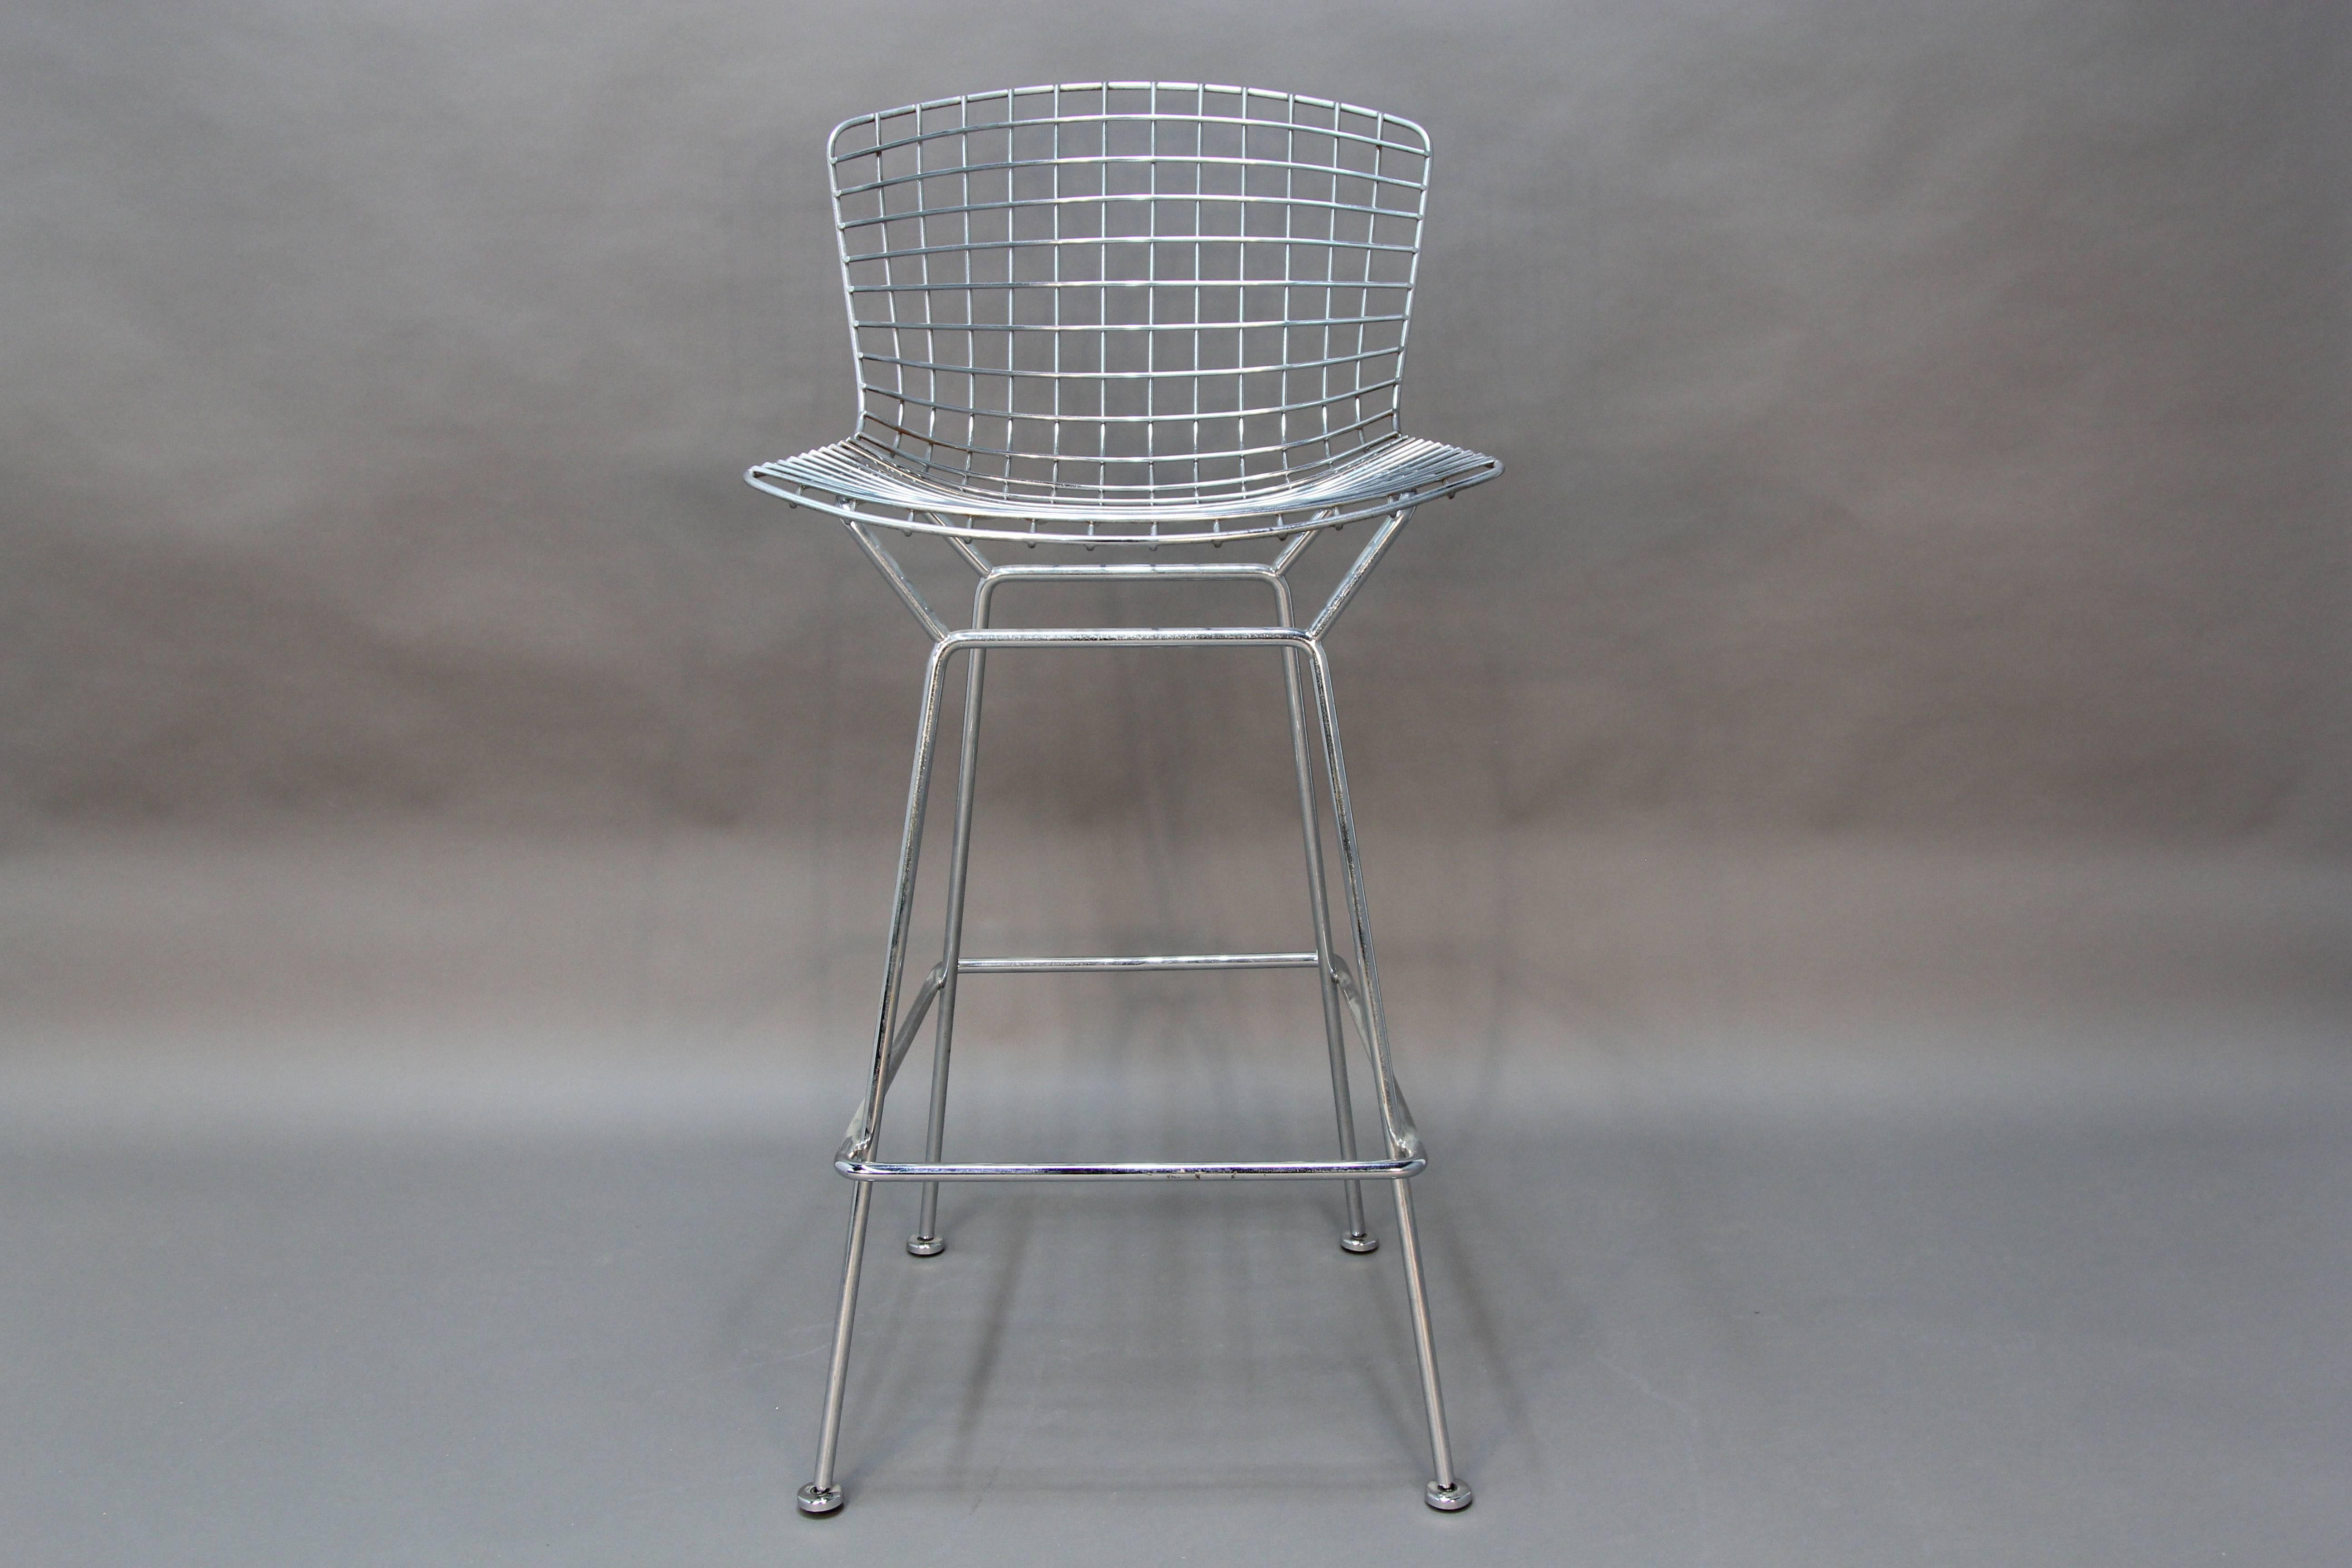 Chrome Harry Bertoia designed bar stools for Knoll.